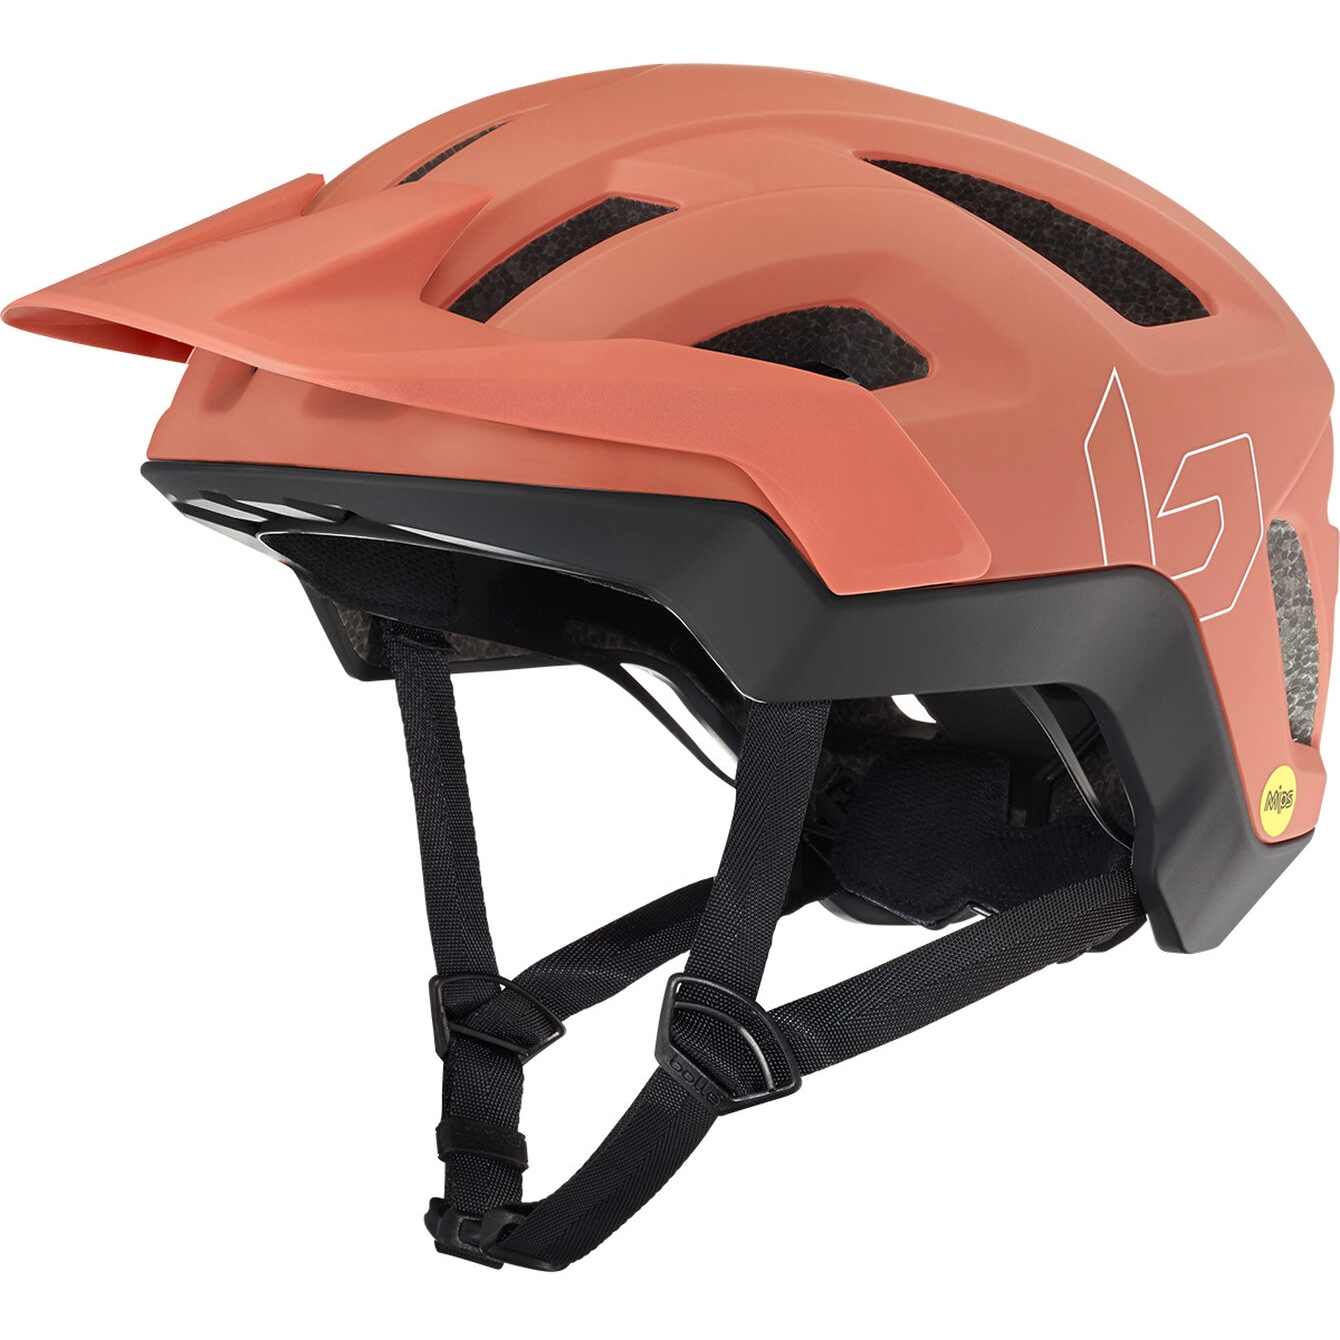 Picture of Bollé Adapt MIPS Helmet - matte brick red